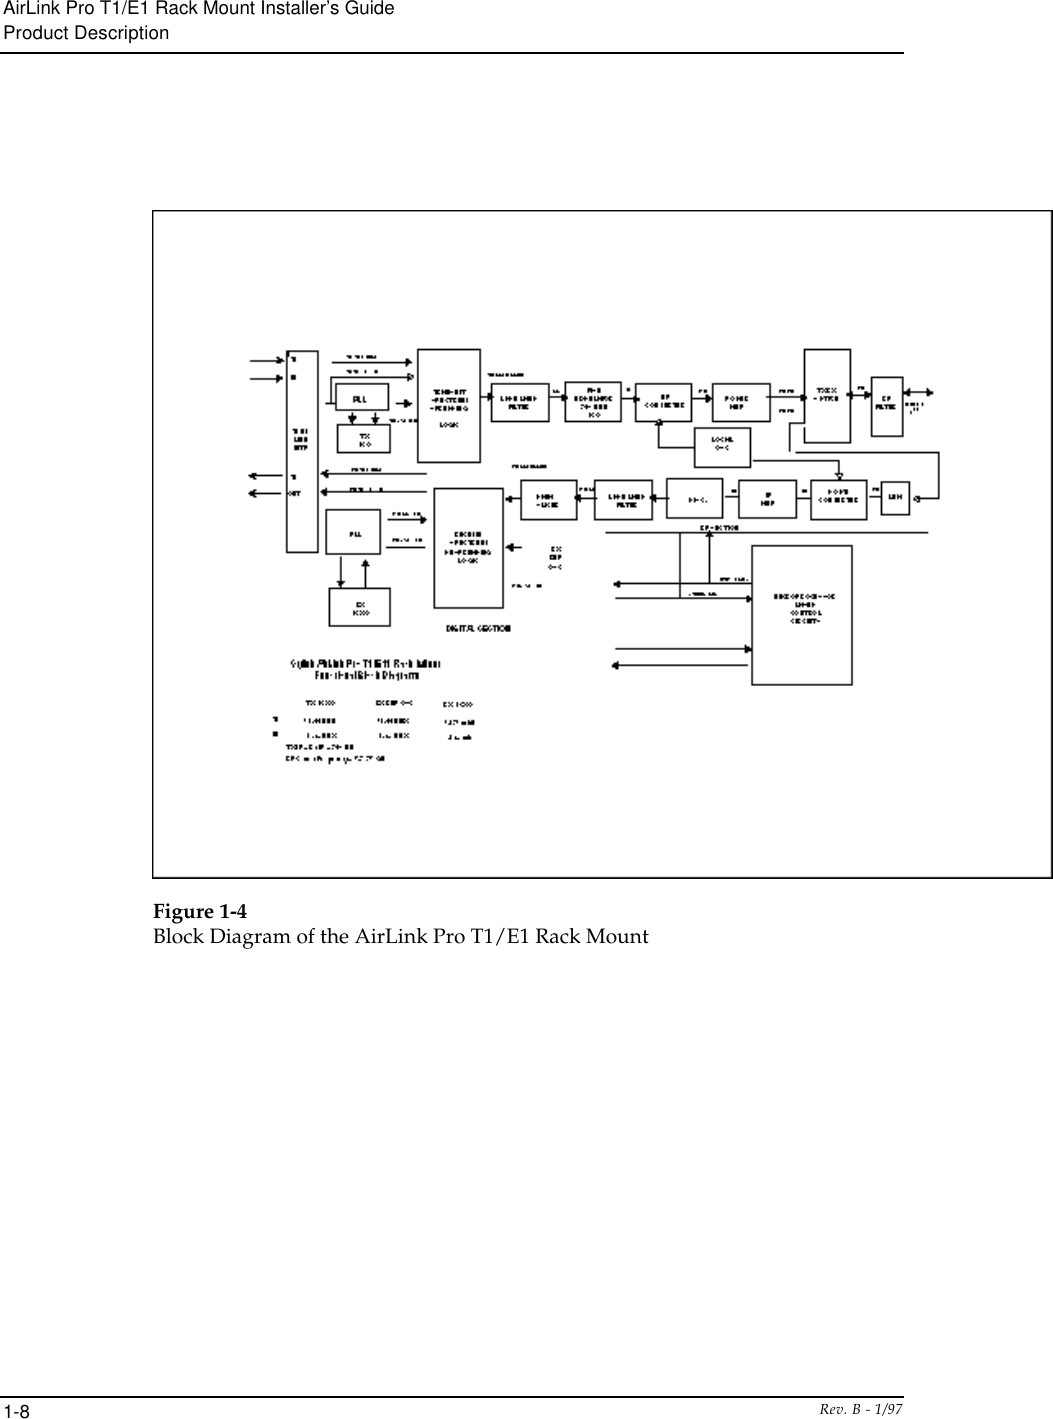 AirLink Pro T1/E1 Rack Mount Installer’s GuideProduct DescriptionRev. B - 1/971-8Figure 1-4Block Diagram of the AirLink Pro T1/E1 Rack Mount